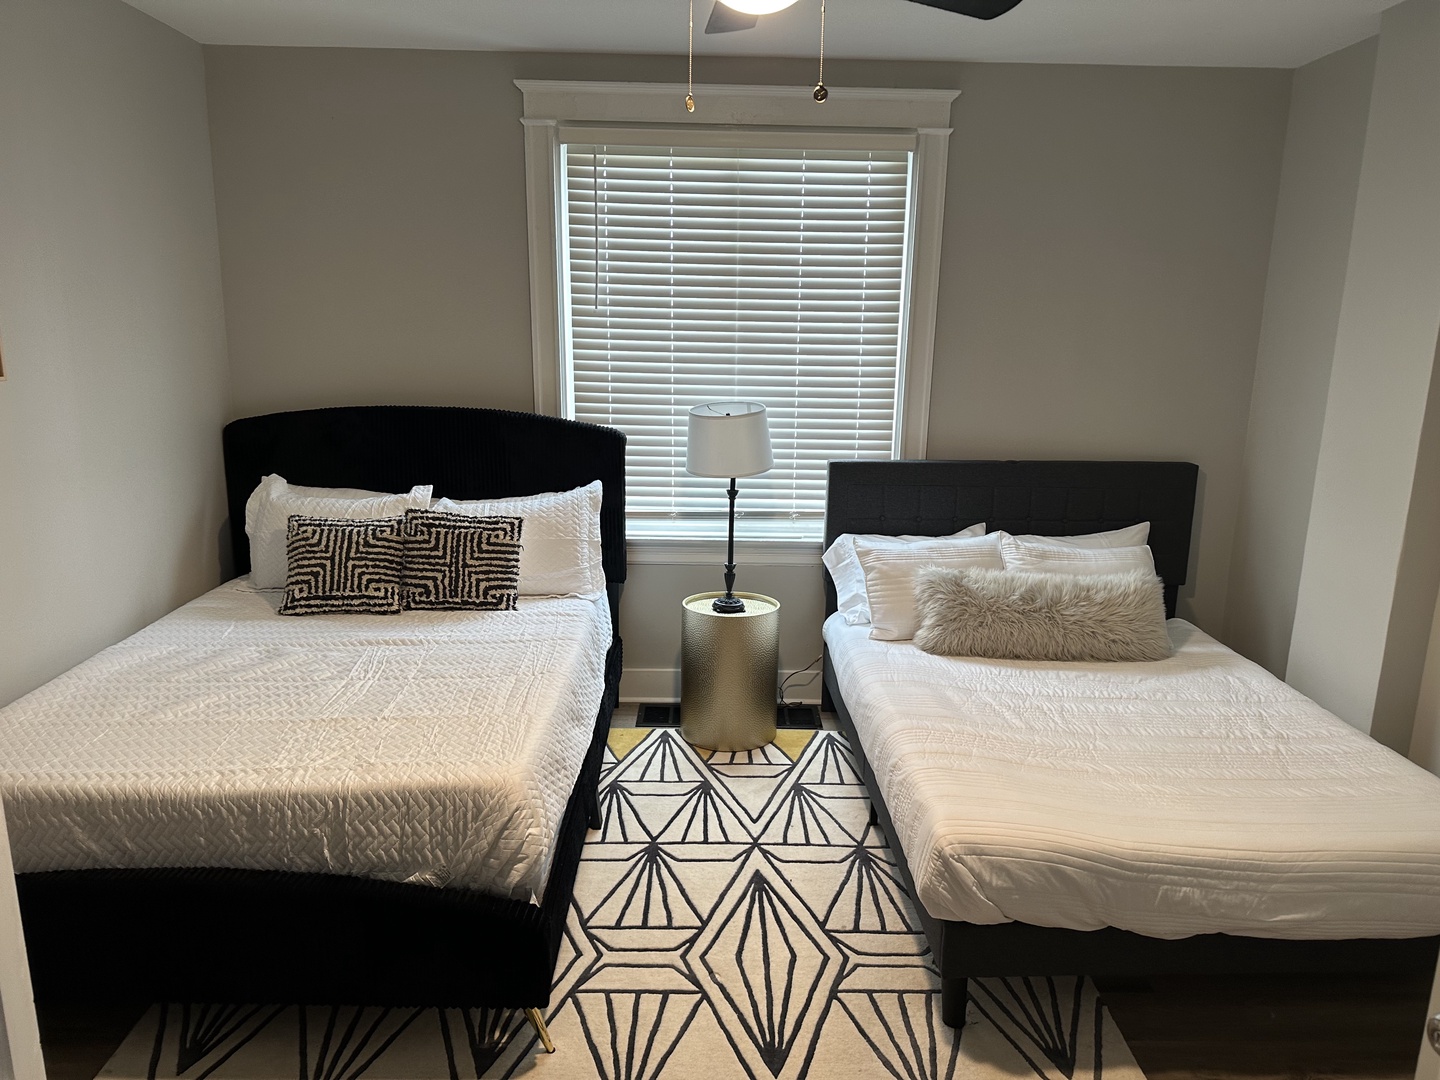 Apt 1 – The comfortable bedroom includes 2 queen beds & ceiling fan